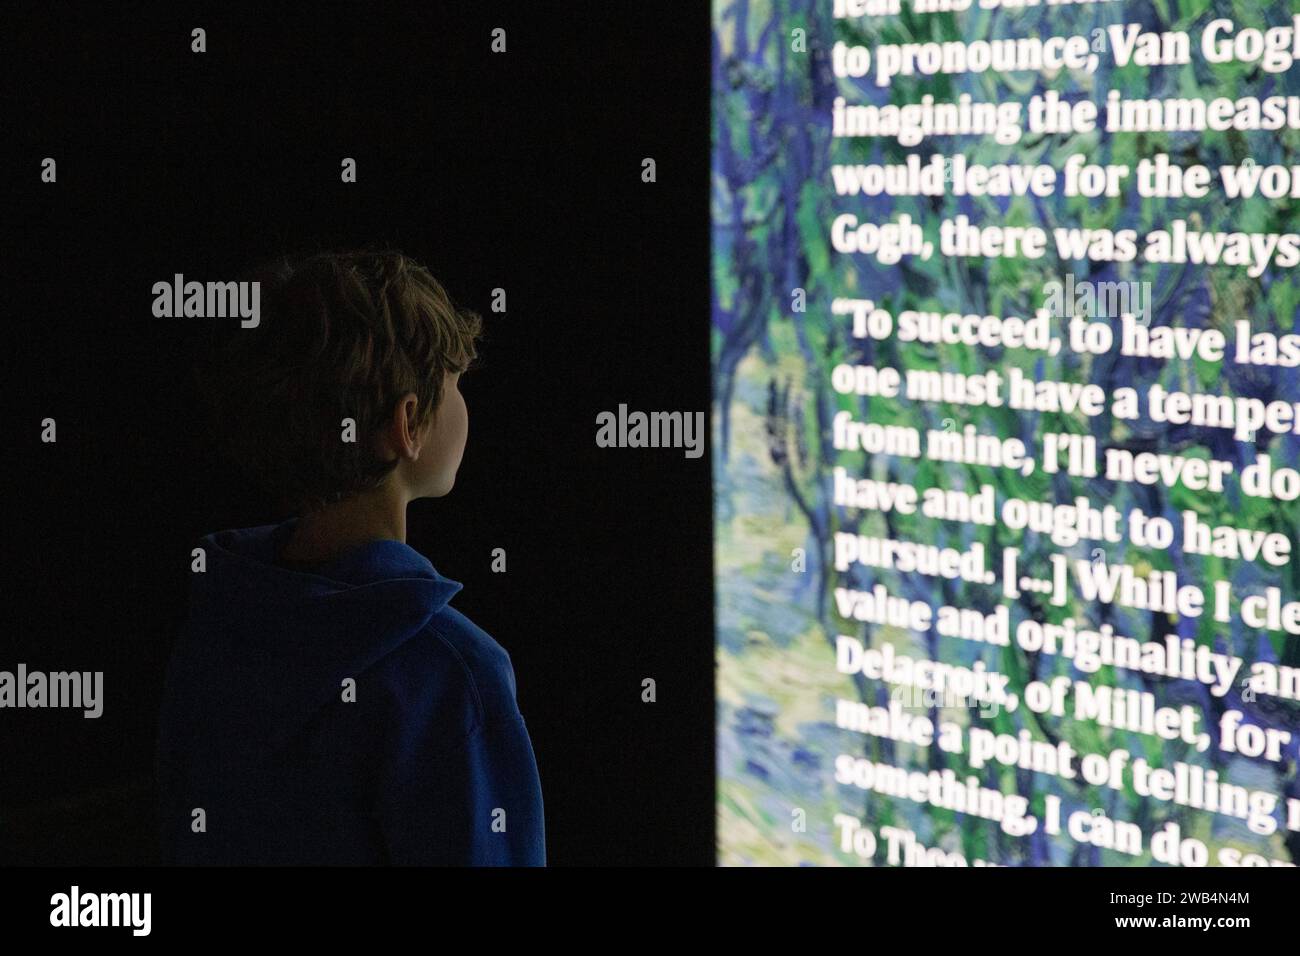 Boy viewing Beyond Van Gogh exhibit in Regina, Saskatchewan, Canada Stock Photo